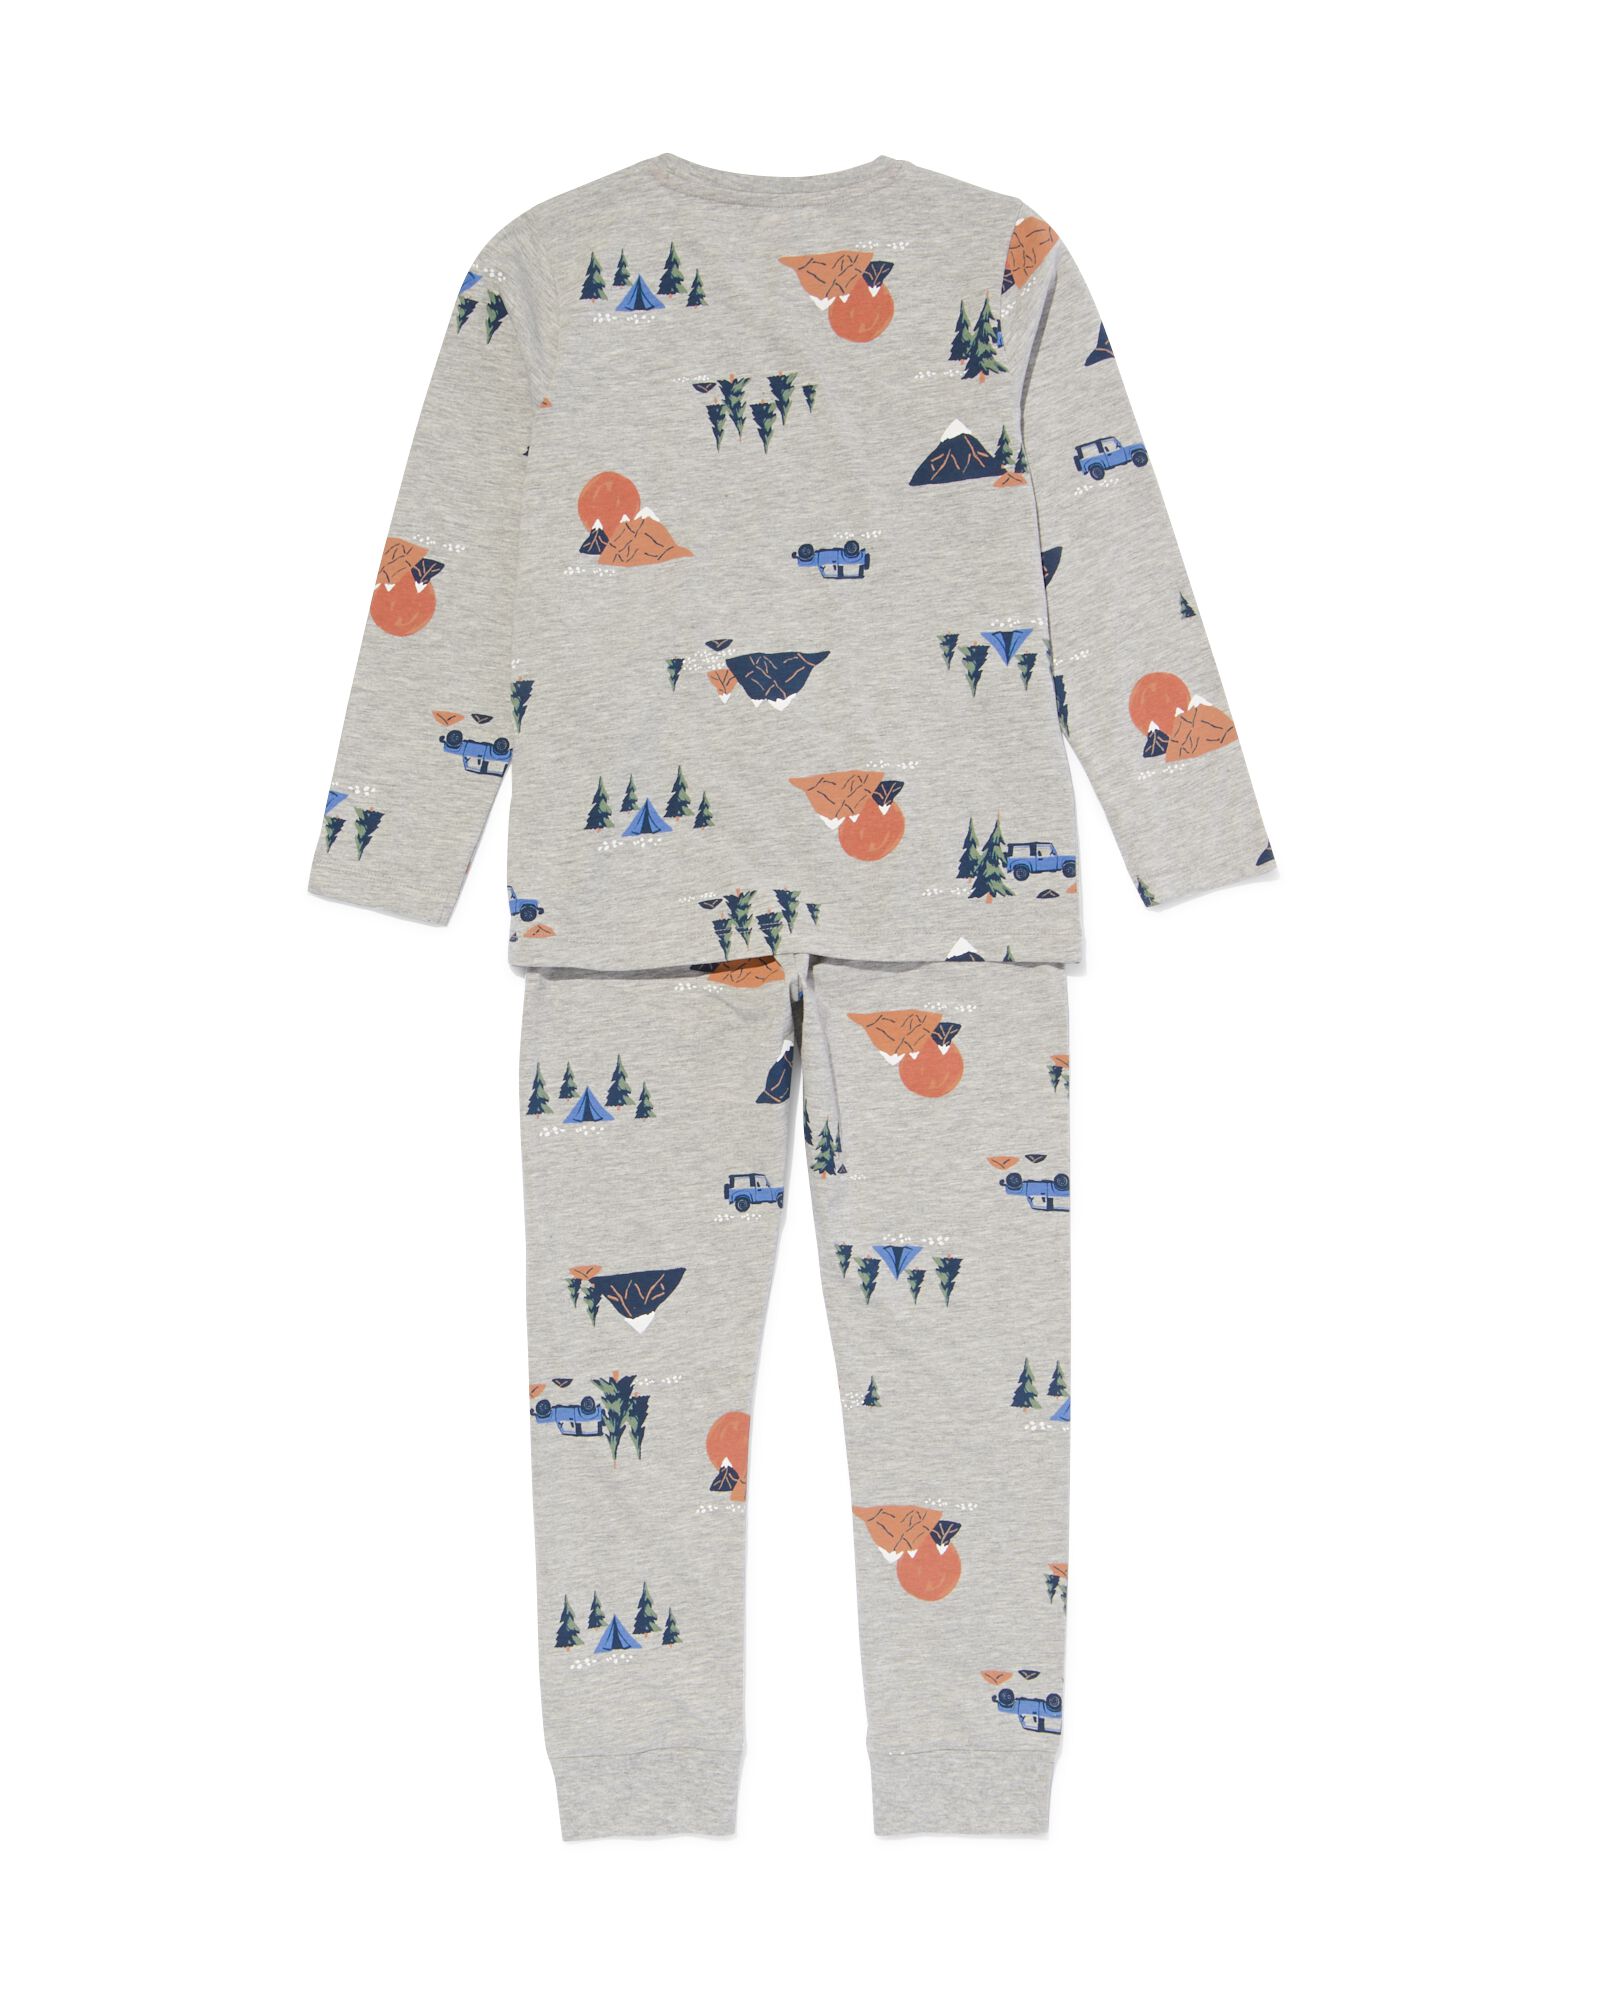 Kinder-Pyjama, Abenteuer graumeliert 158/164 - 23020687 - HEMA